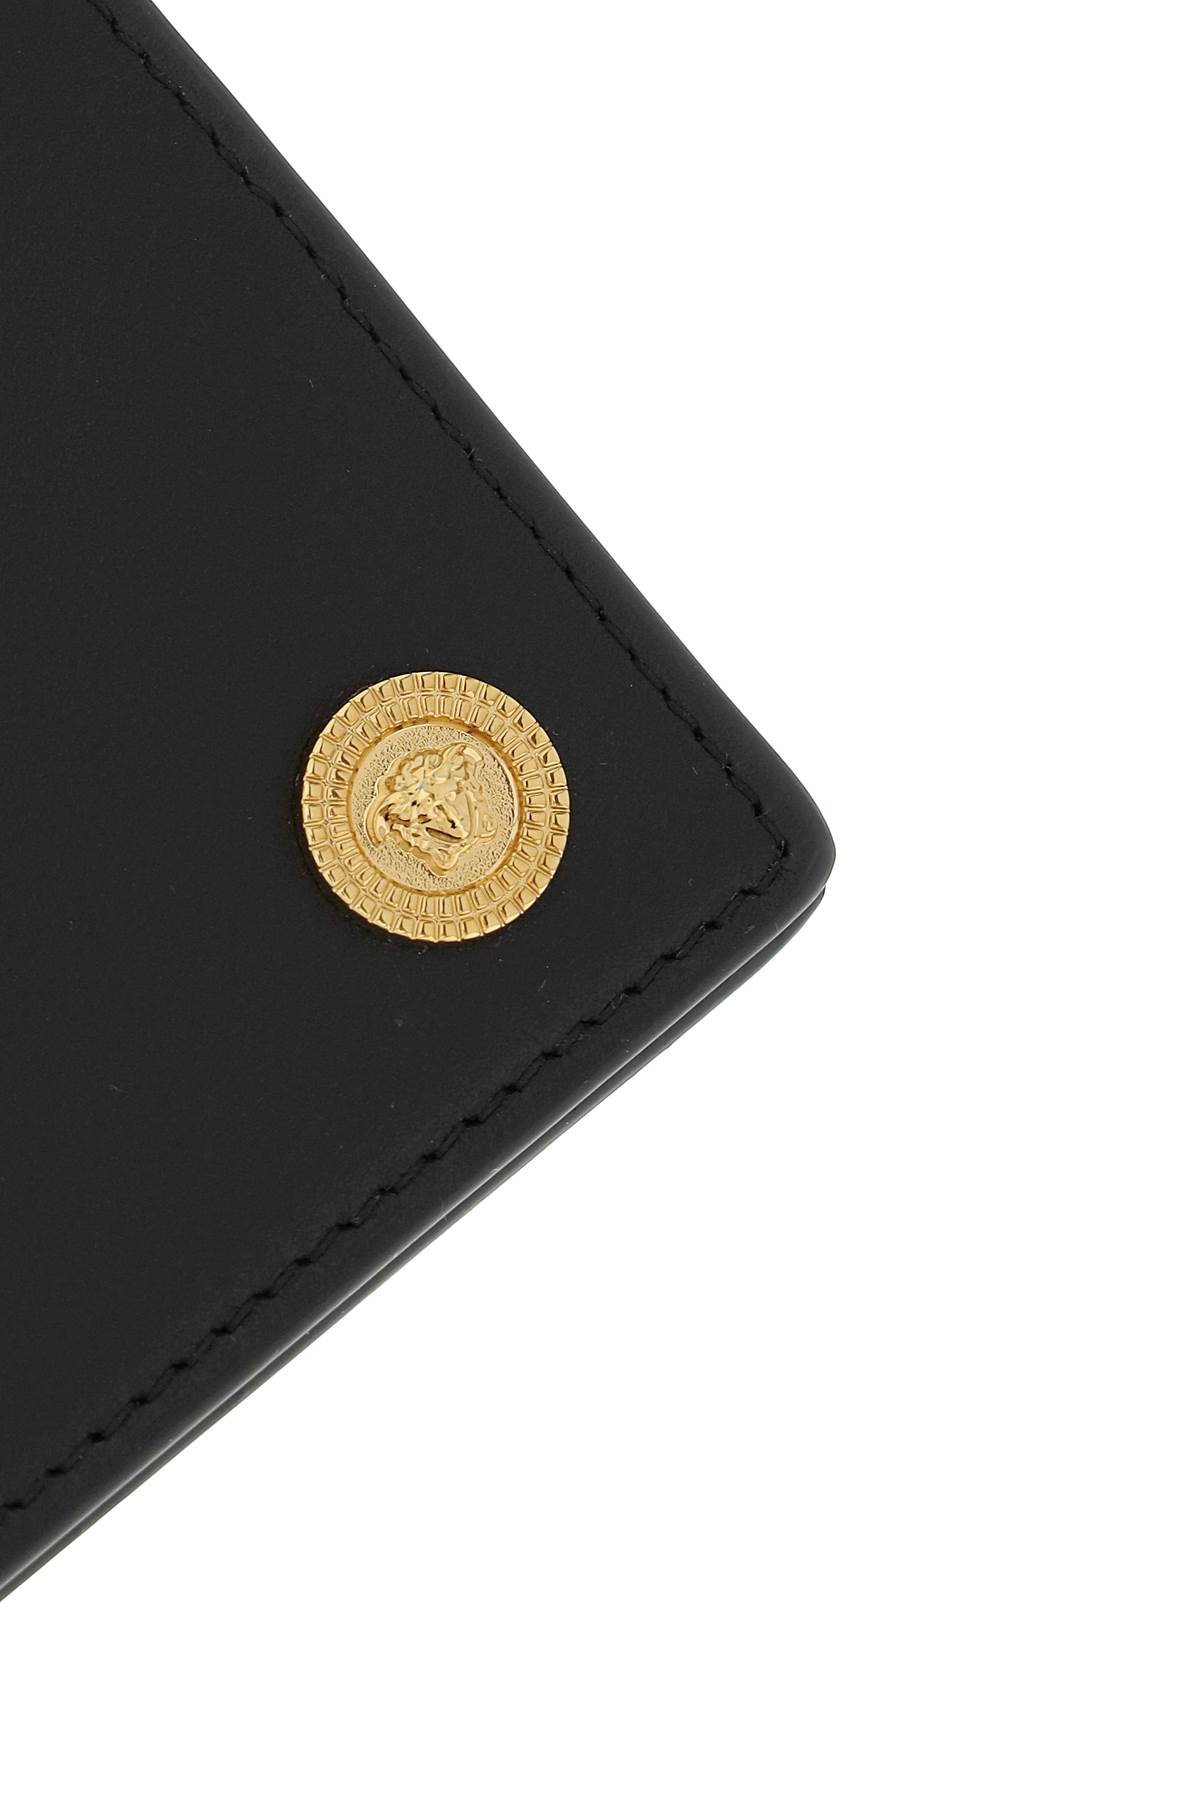 Versace Biggie Medusa Coin Bifold Wallet in Black/Gold